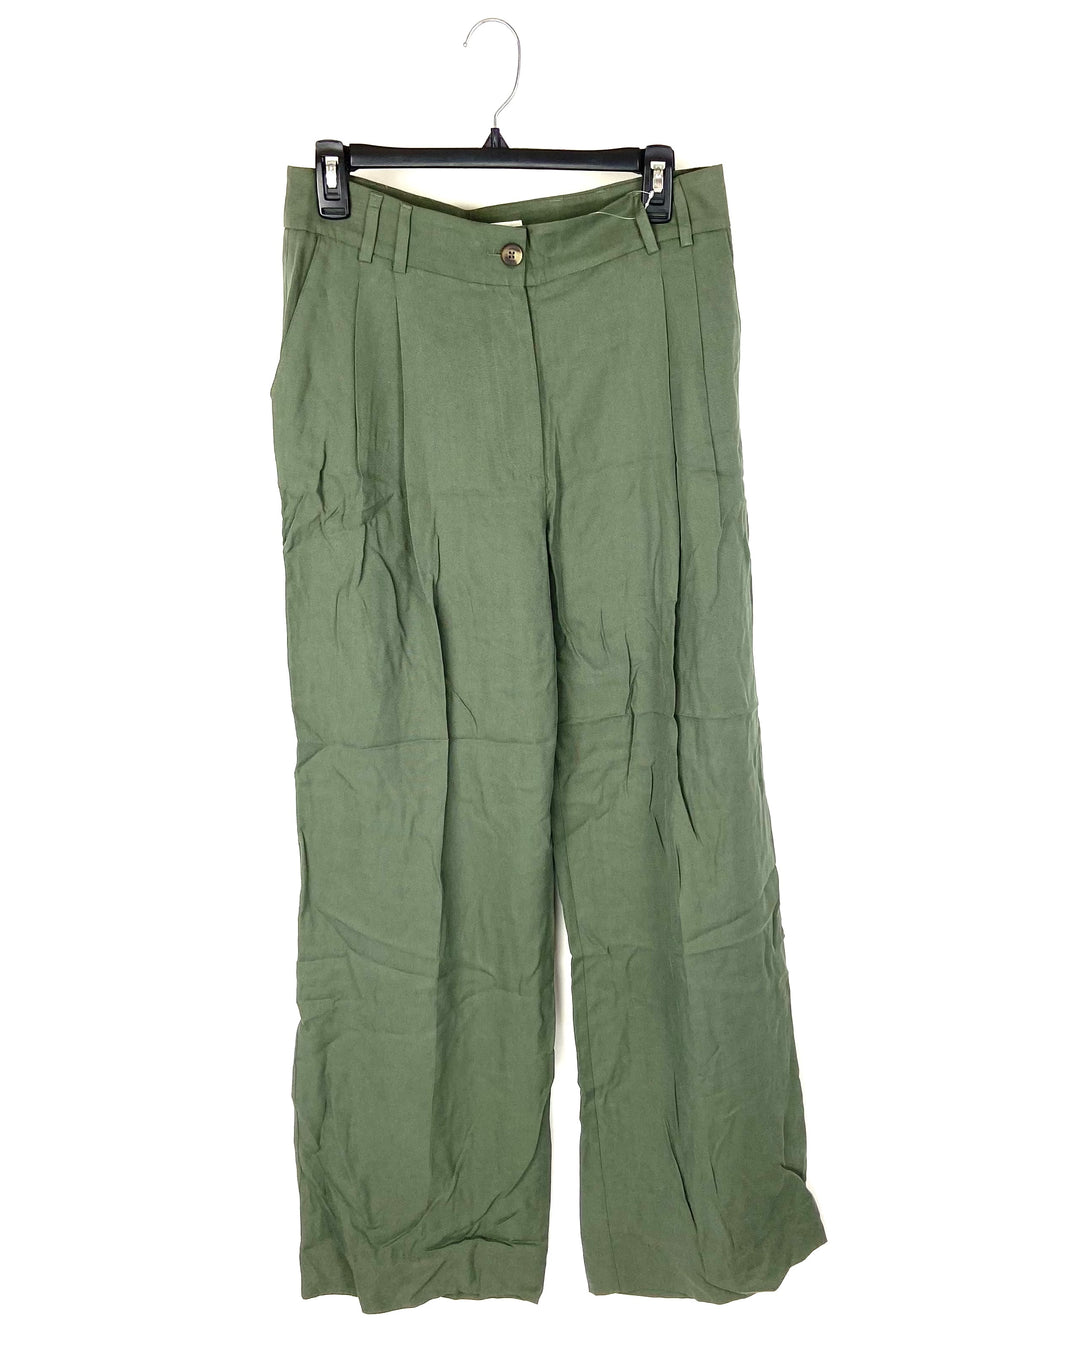 Olive Green Khaki Pants - Size 12 Long